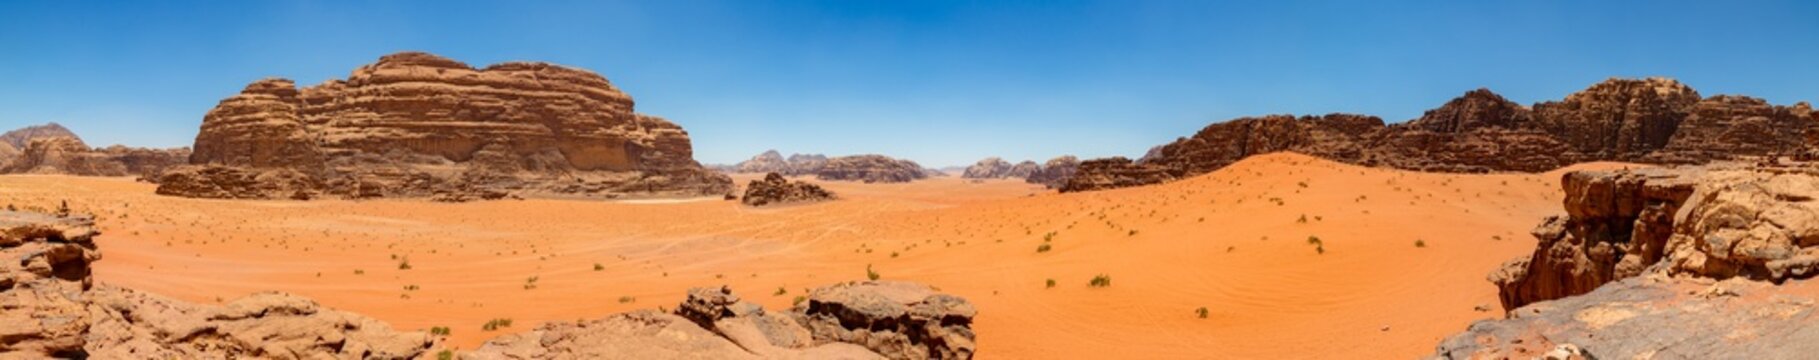 Wadi Rum Landscape Panorama